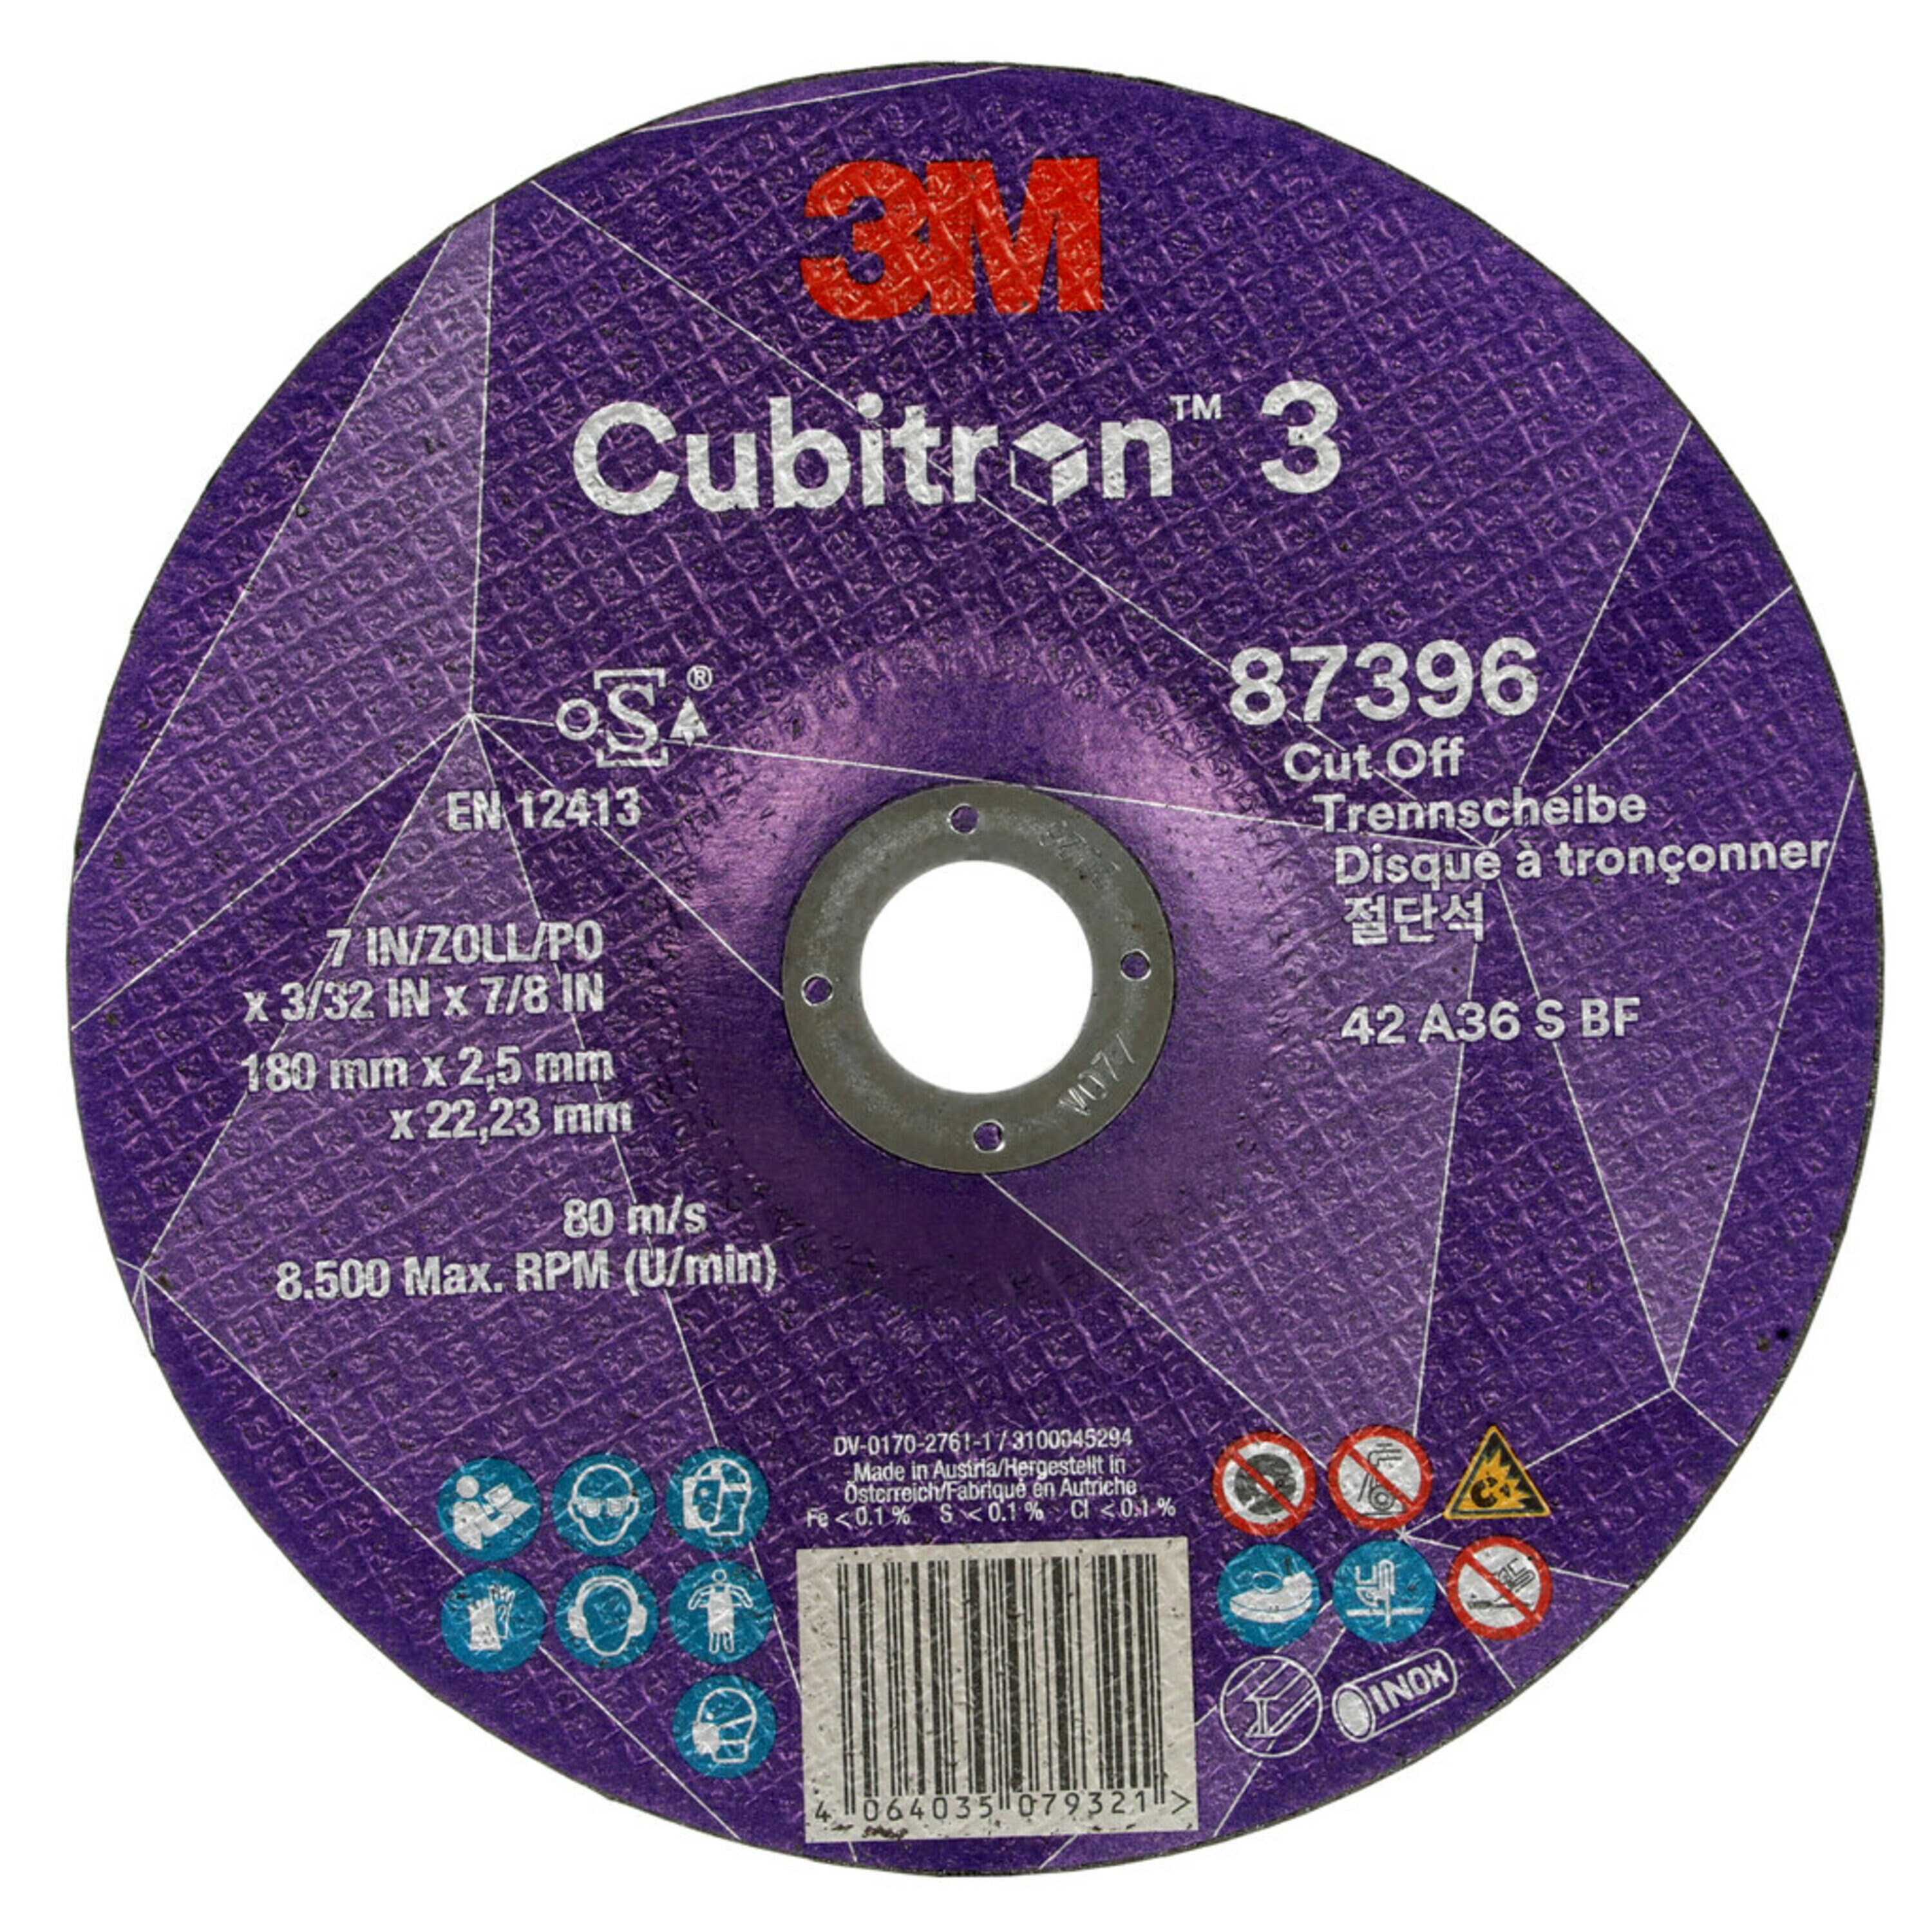 3M Cubitron 3 cut-off wheel, 180 mm, 2.5 mm, 22.23 mm, 36 , type 42 #87396